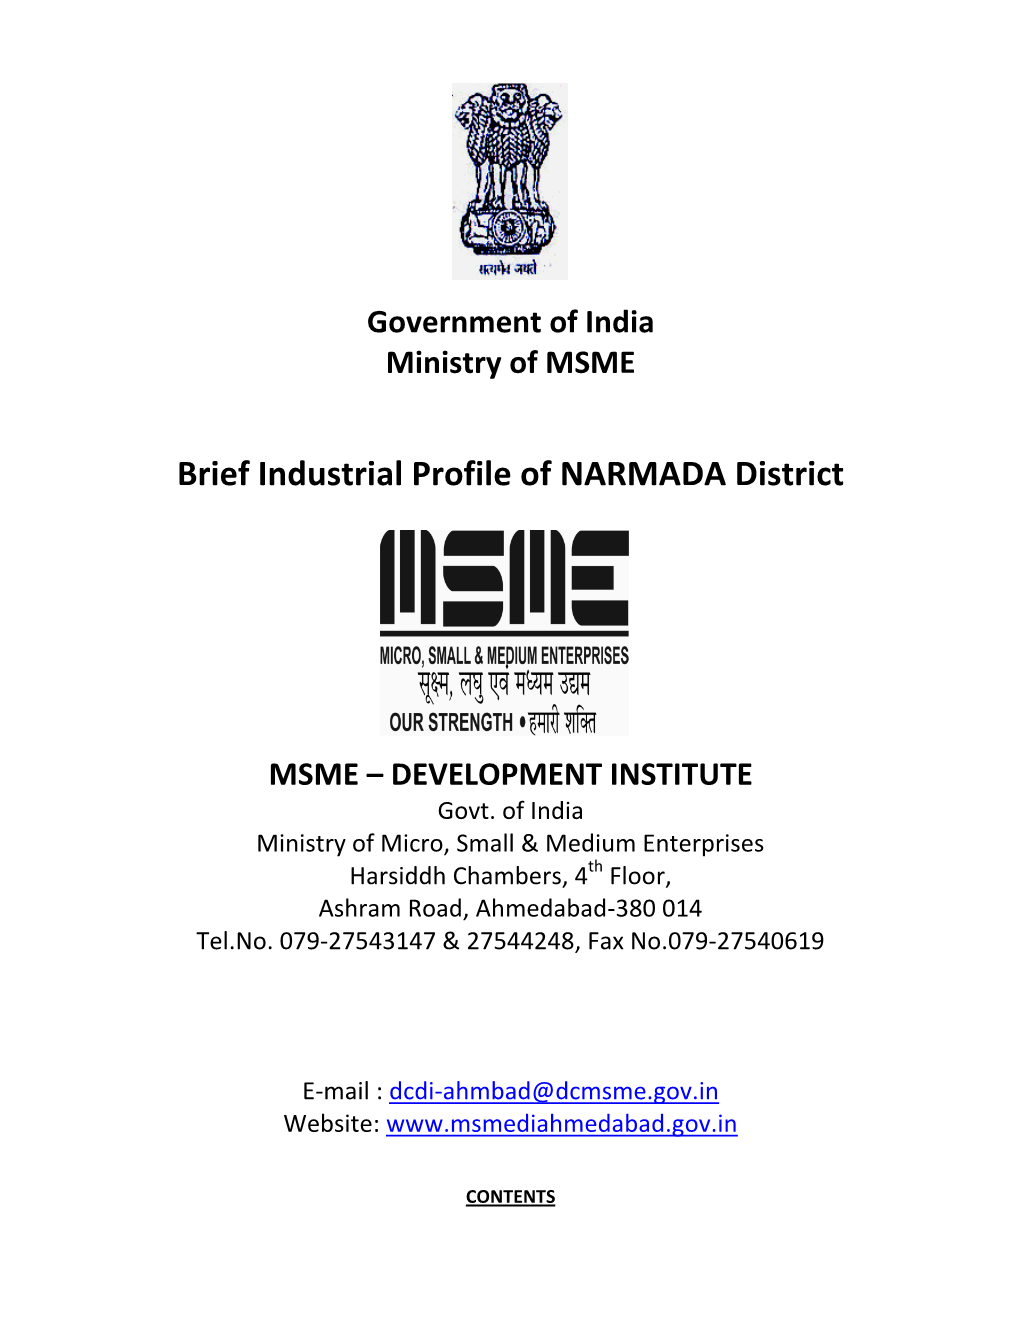 Brief Industrial Profile of NARMADA District